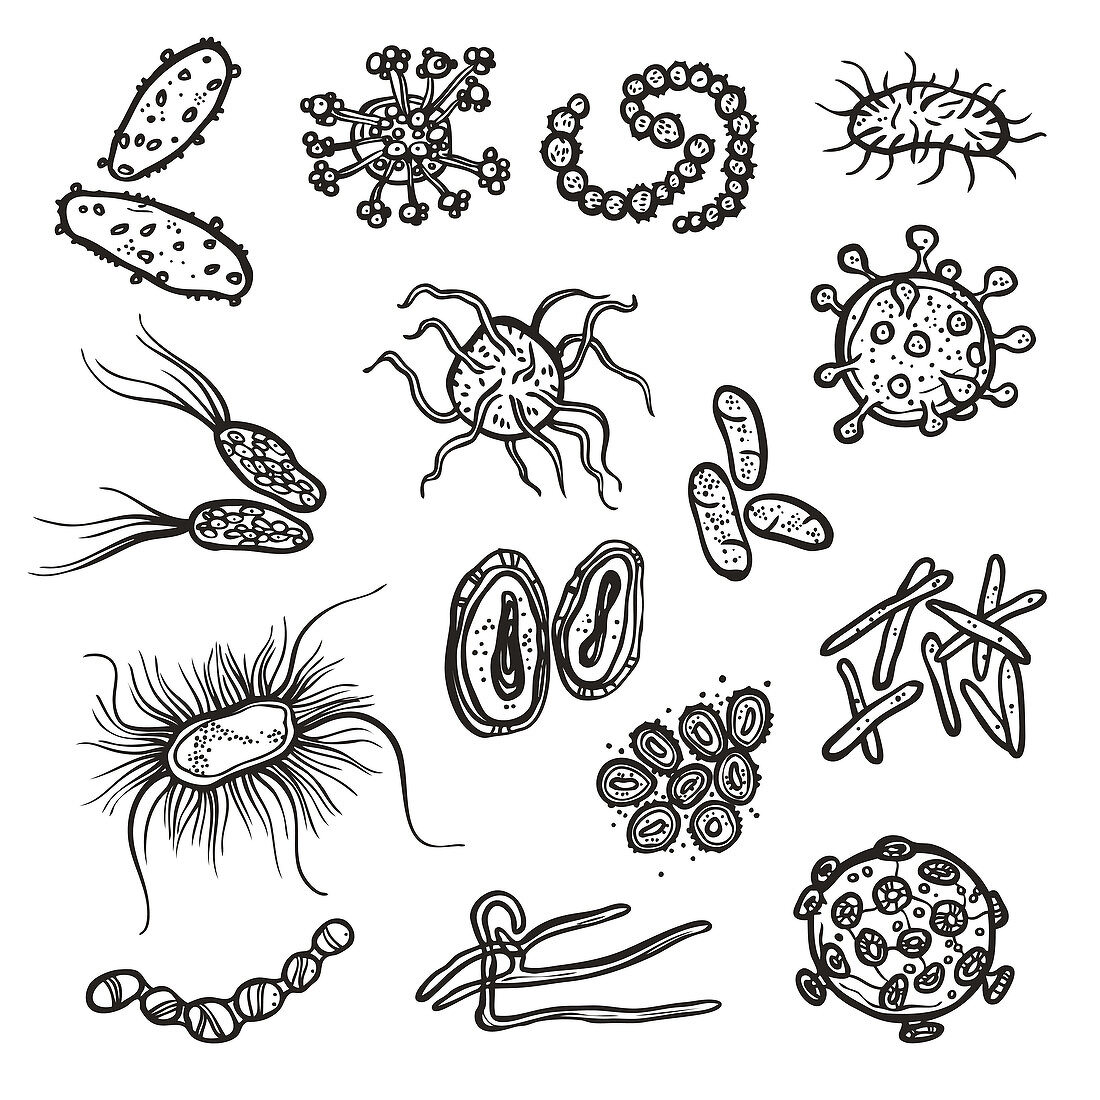 Bacteria and viruses, illustration